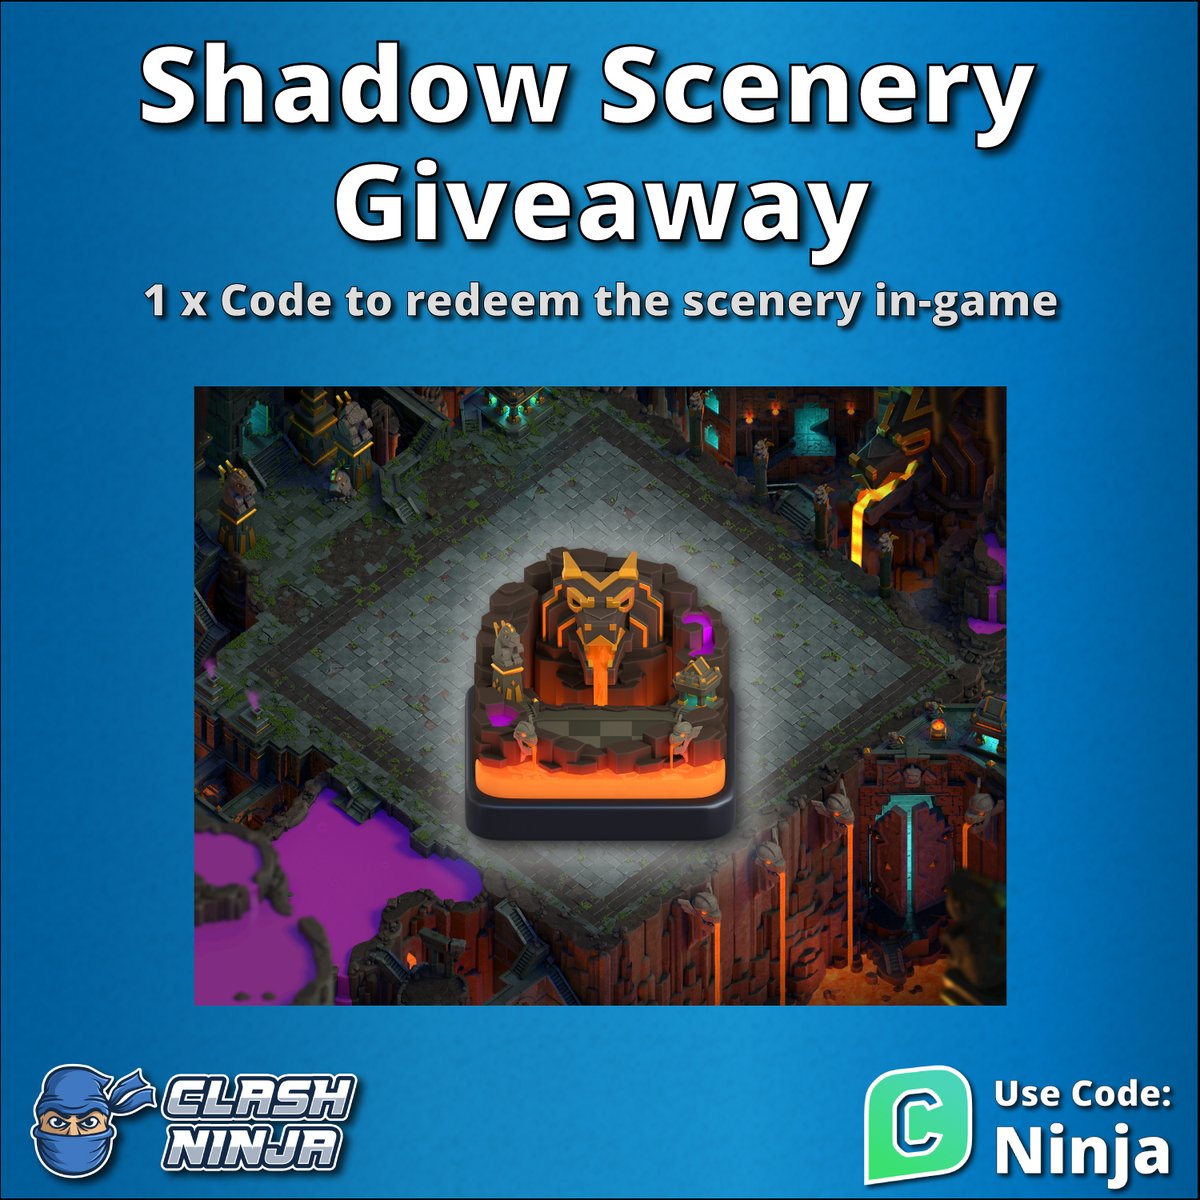 Shadow Scenery Giveaway!

1 x Shadow Scenery code

To Enter:
✅Follow @ClashDotNinja
✅Retweet this tweet

Optional:
Subscribe to youtube.com/c/clashninja

Winner announced after 12:00 UTC 9th May 2024

#ClashofClans #GiftedBySupercell